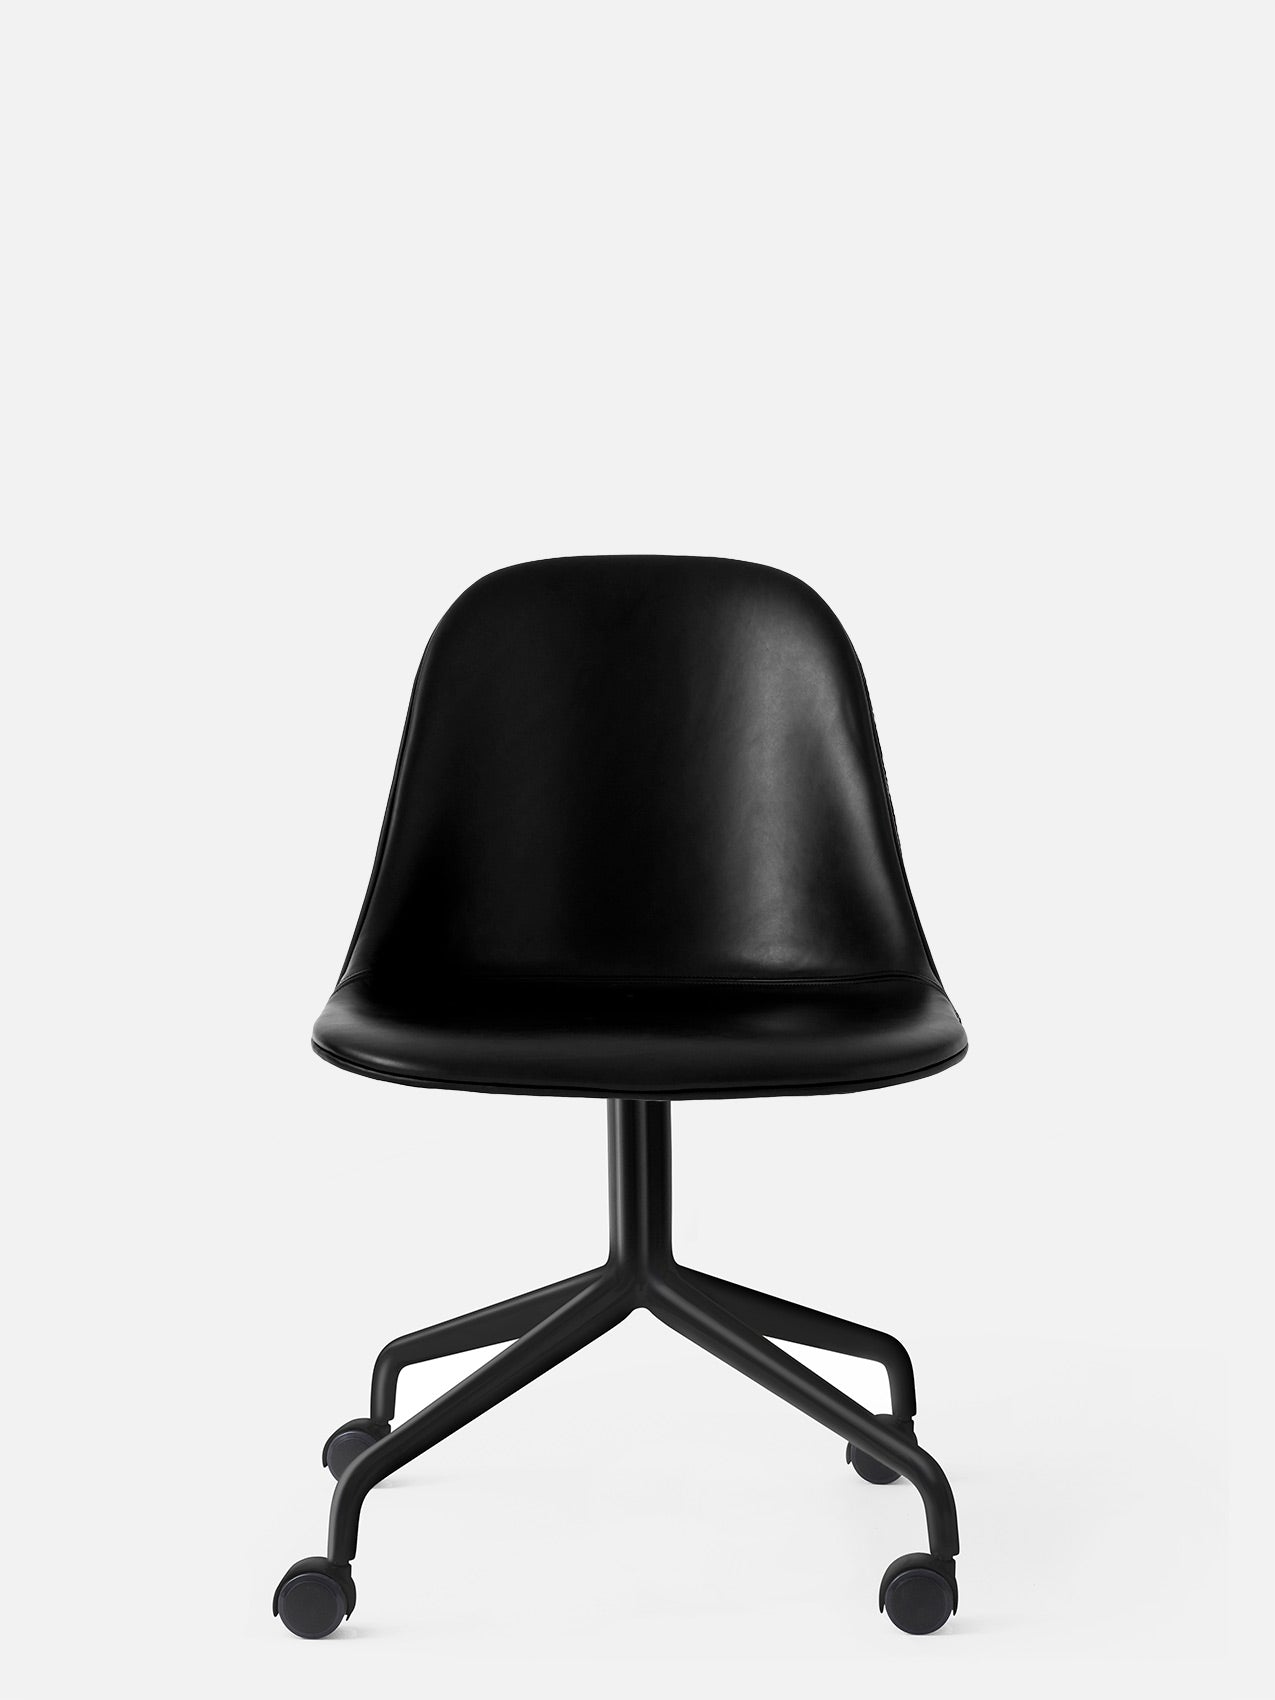 Harbour Side Chair, Upholstered-Chair-Norm Architects-Star Base (Seat 17.7in H)/Black Steel w. Casters-0842 Black/Dakar-menu-minimalist-modern-danish-design-home-decor